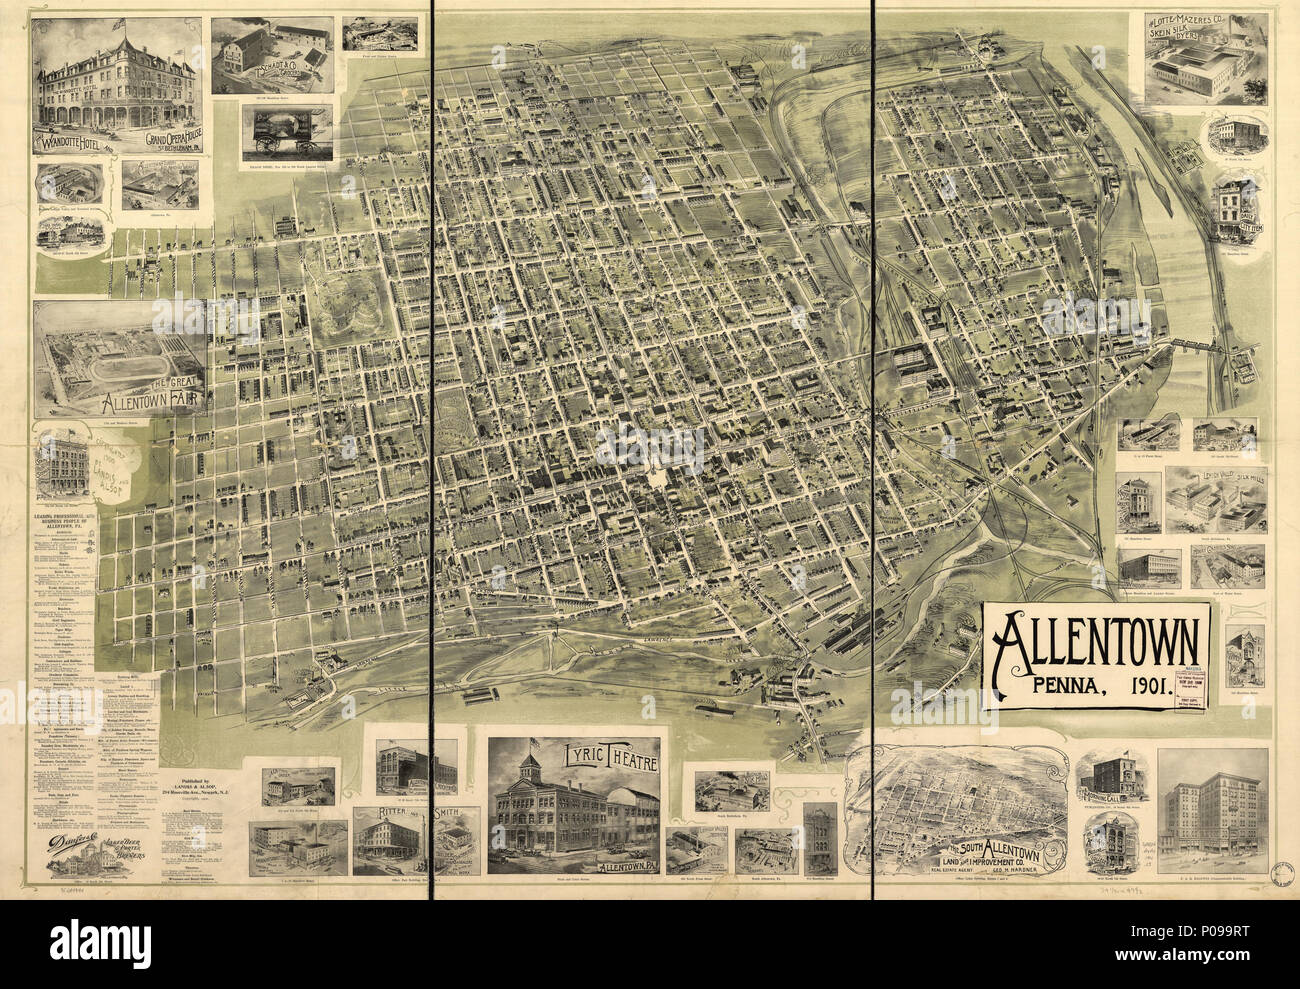 280 Allentown, Penna. 1901. LOC 75694944 Stock Photo